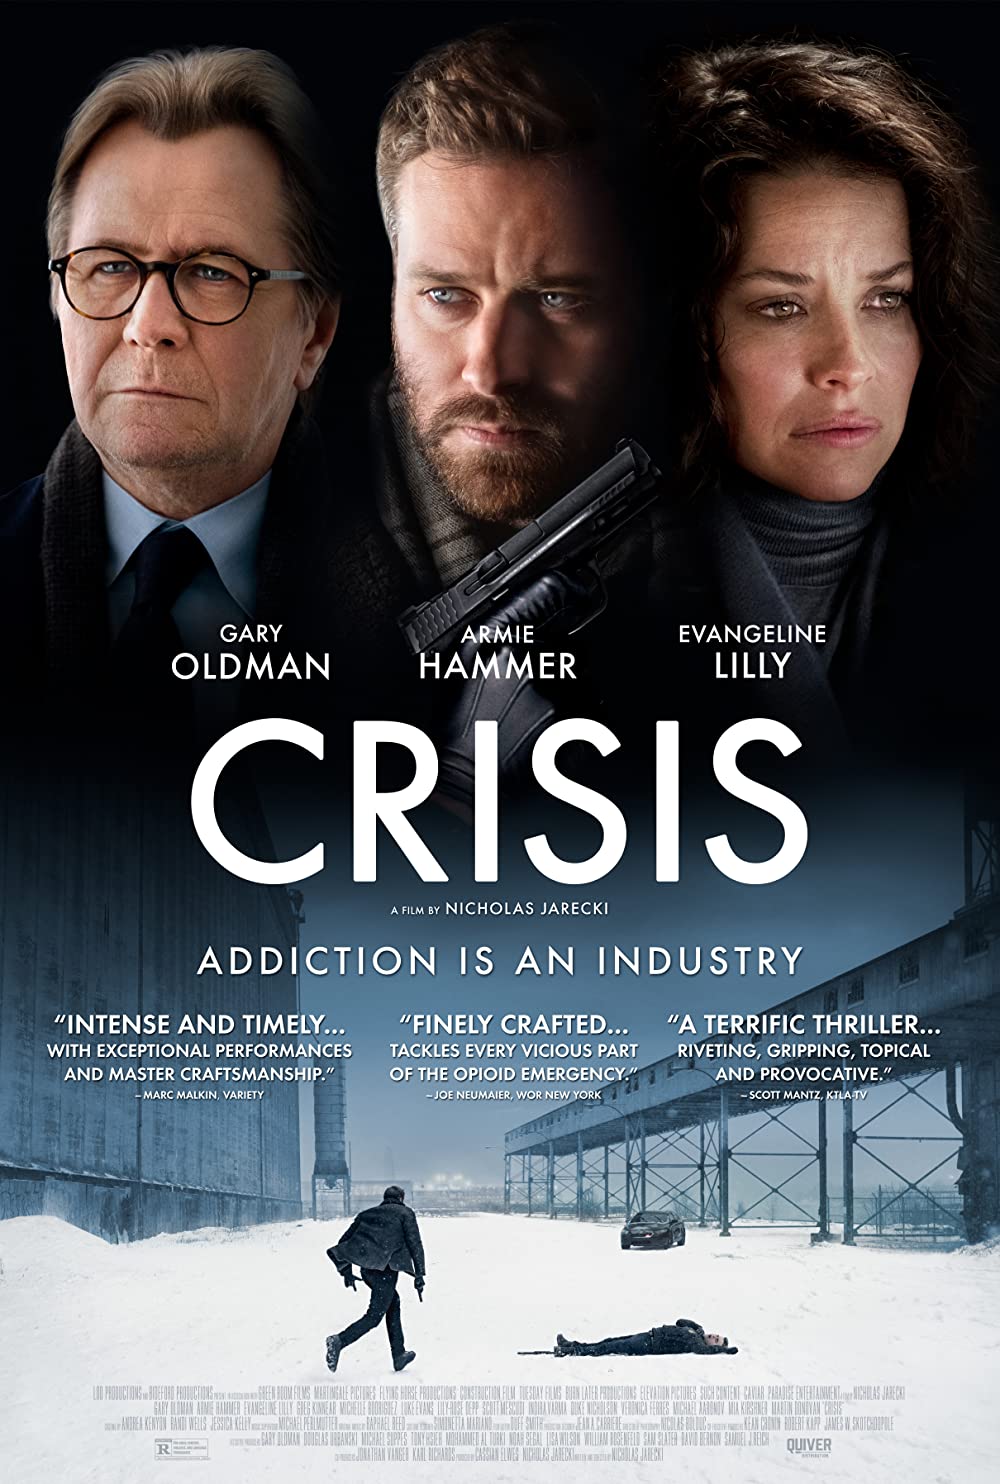 Filmbeschreibung zu Crisis